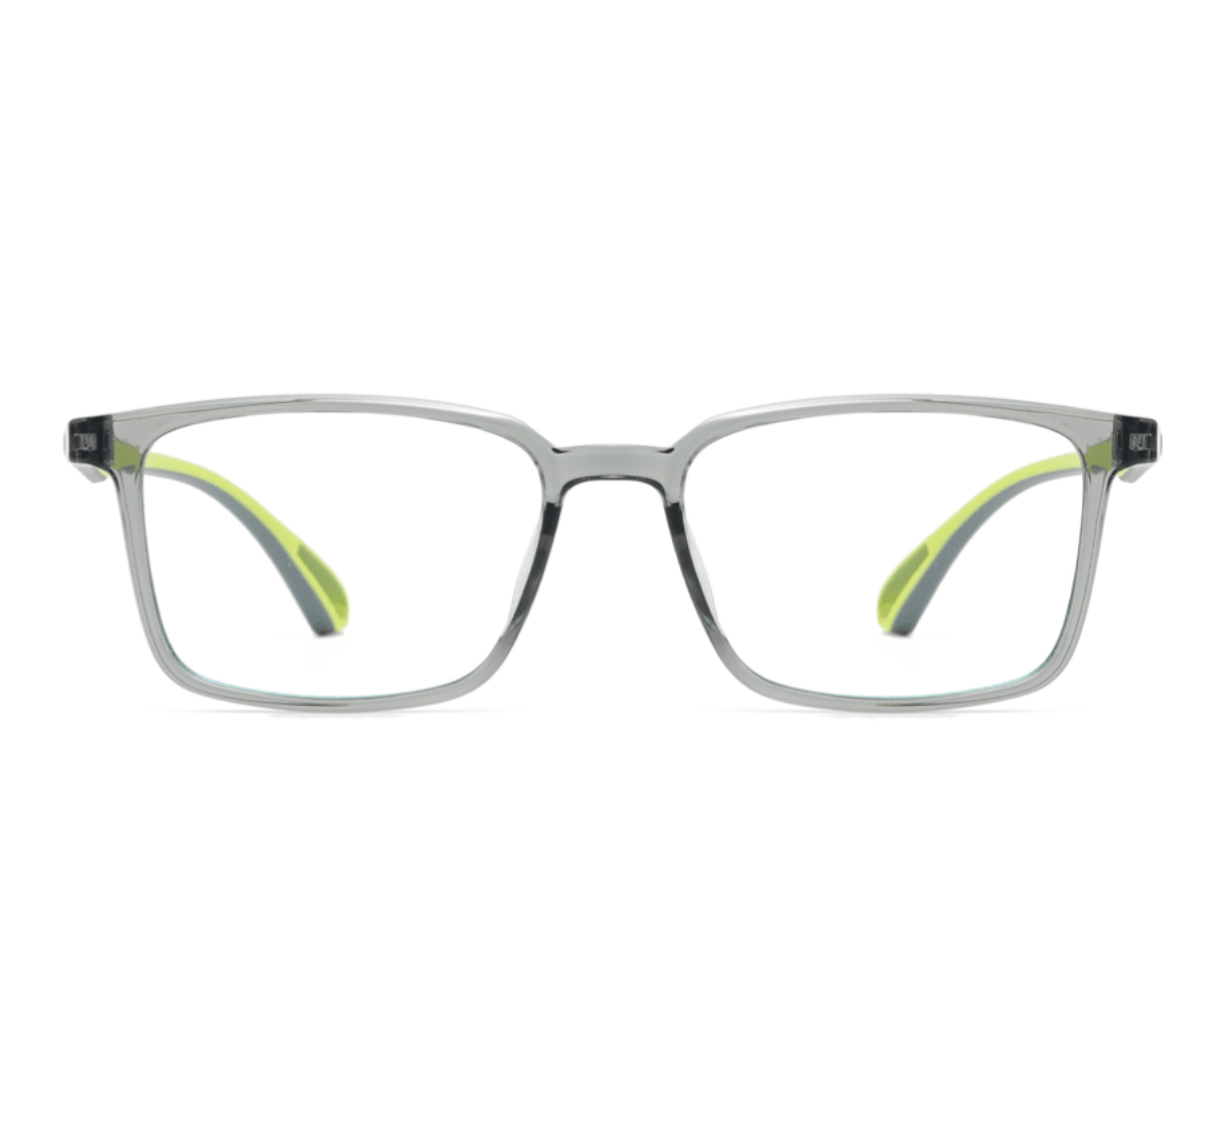 TR90 glasses frames for teenage guys, eyeglass frame vendors, optical glasses manufacturer